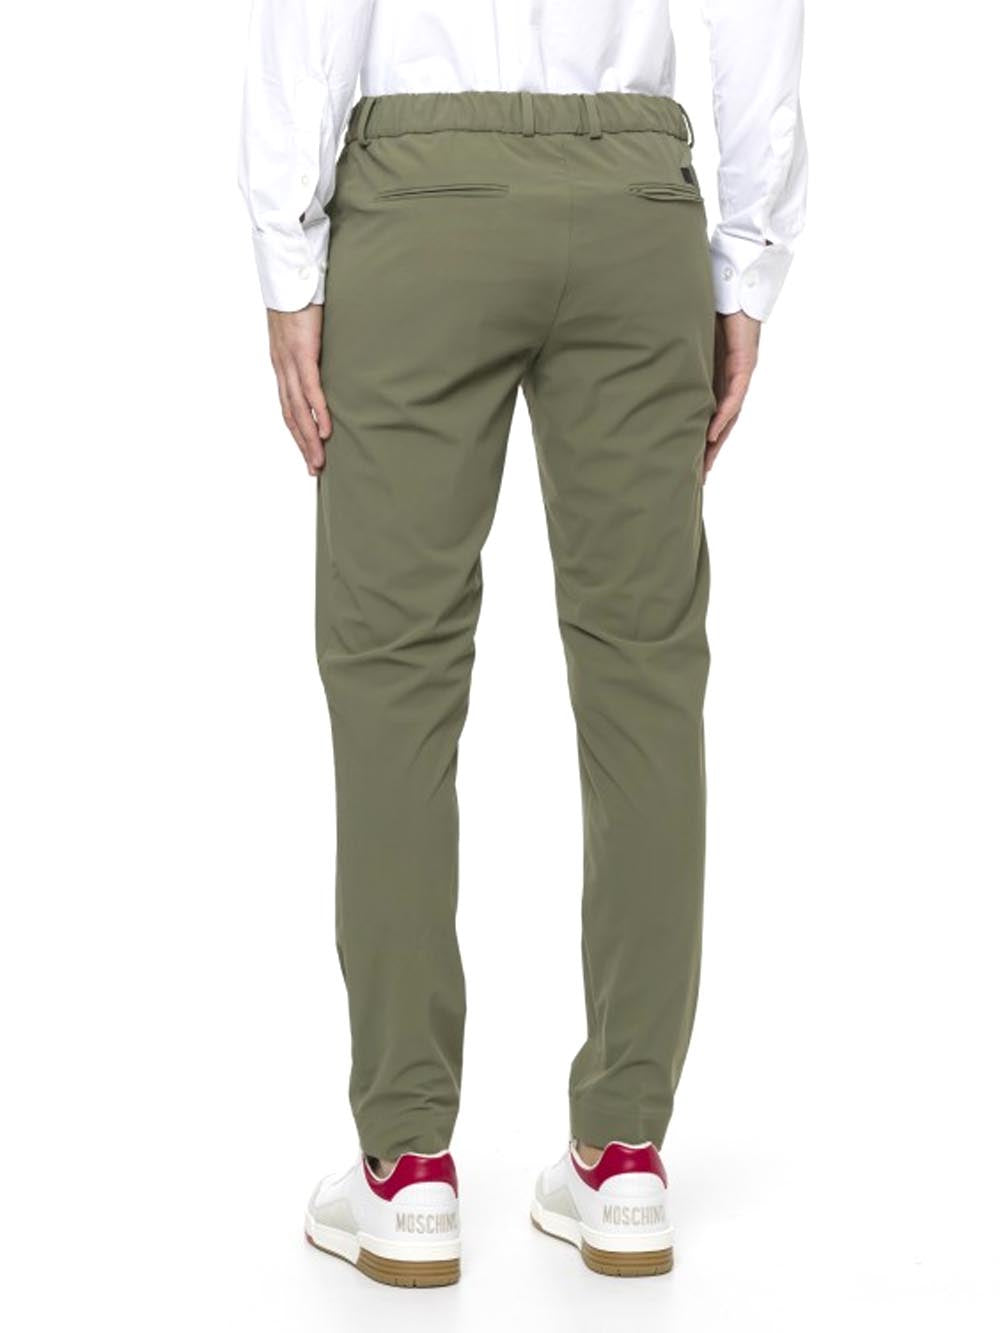 RRD Roberto Ricci Designs Pantalone Uomo Revo Chino Jo Pant Verde bosco